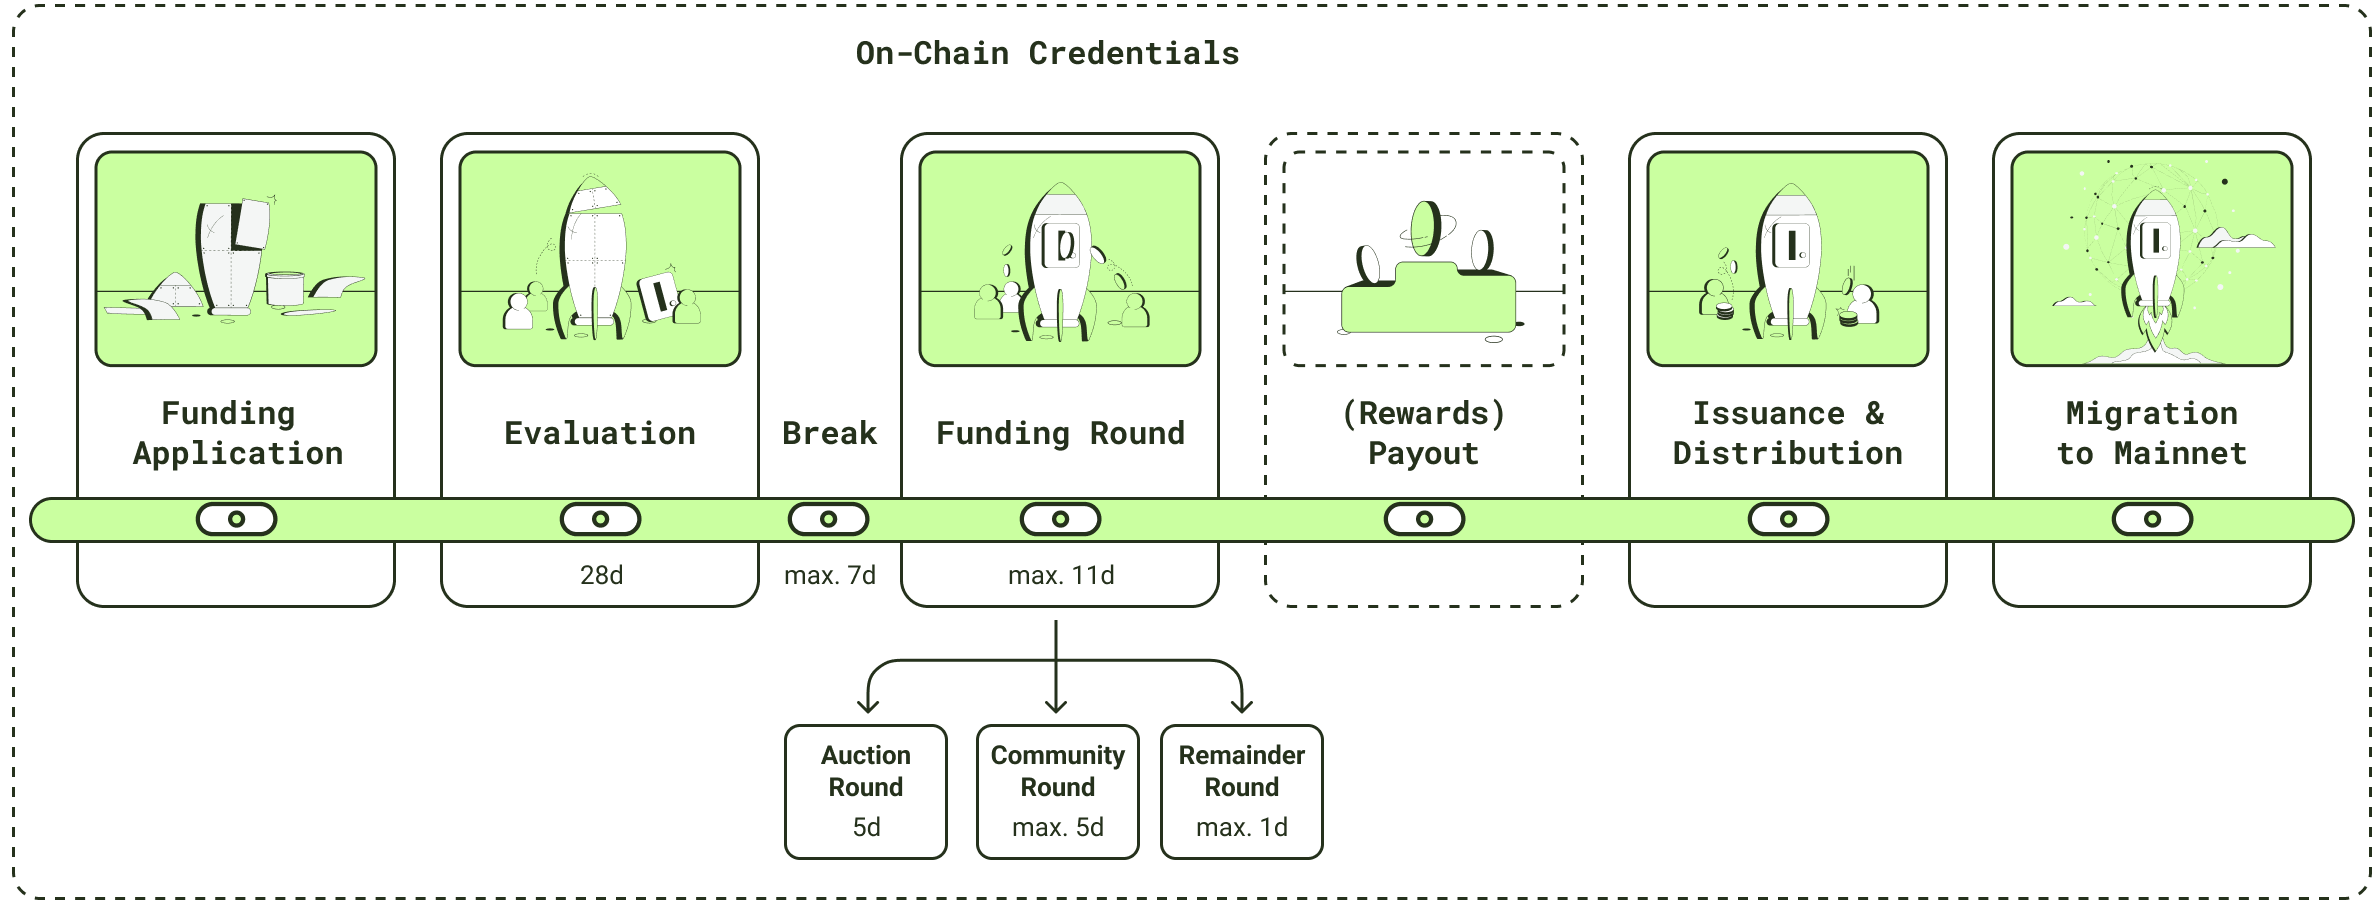 Polimec’s funding process